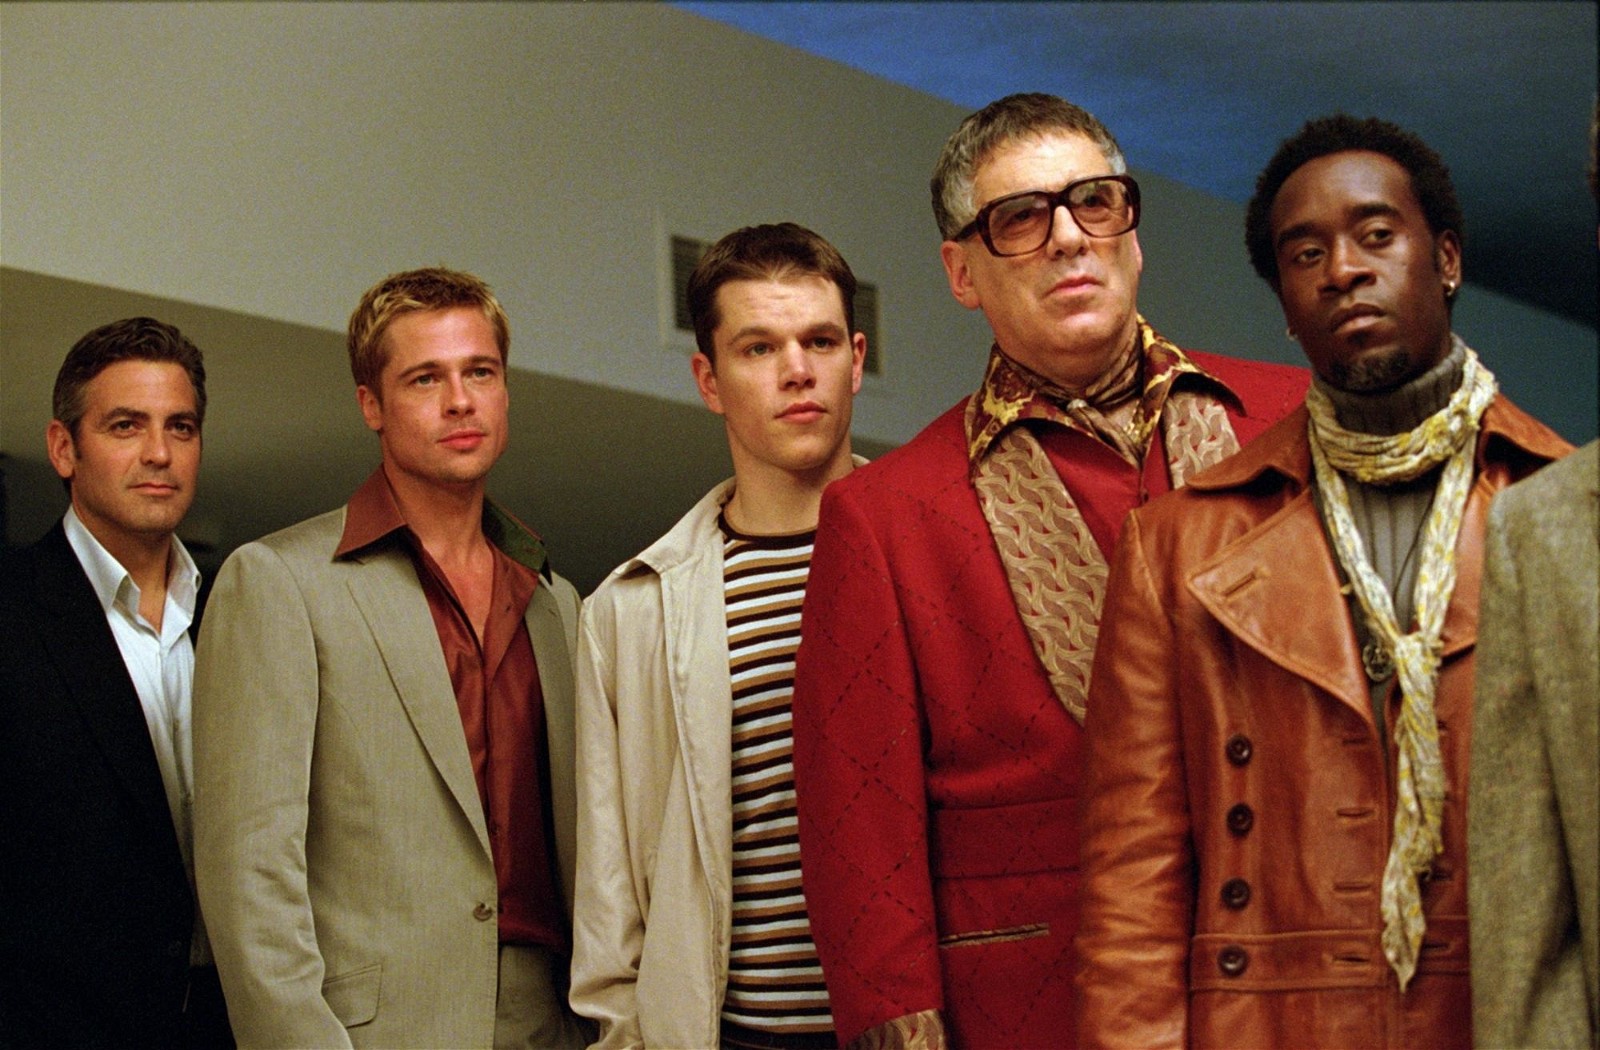 George Clooney, Brad Pitt, Matt Damon, Elliot Gould, and Don Cheadle in Ocean's Eleven (2001)